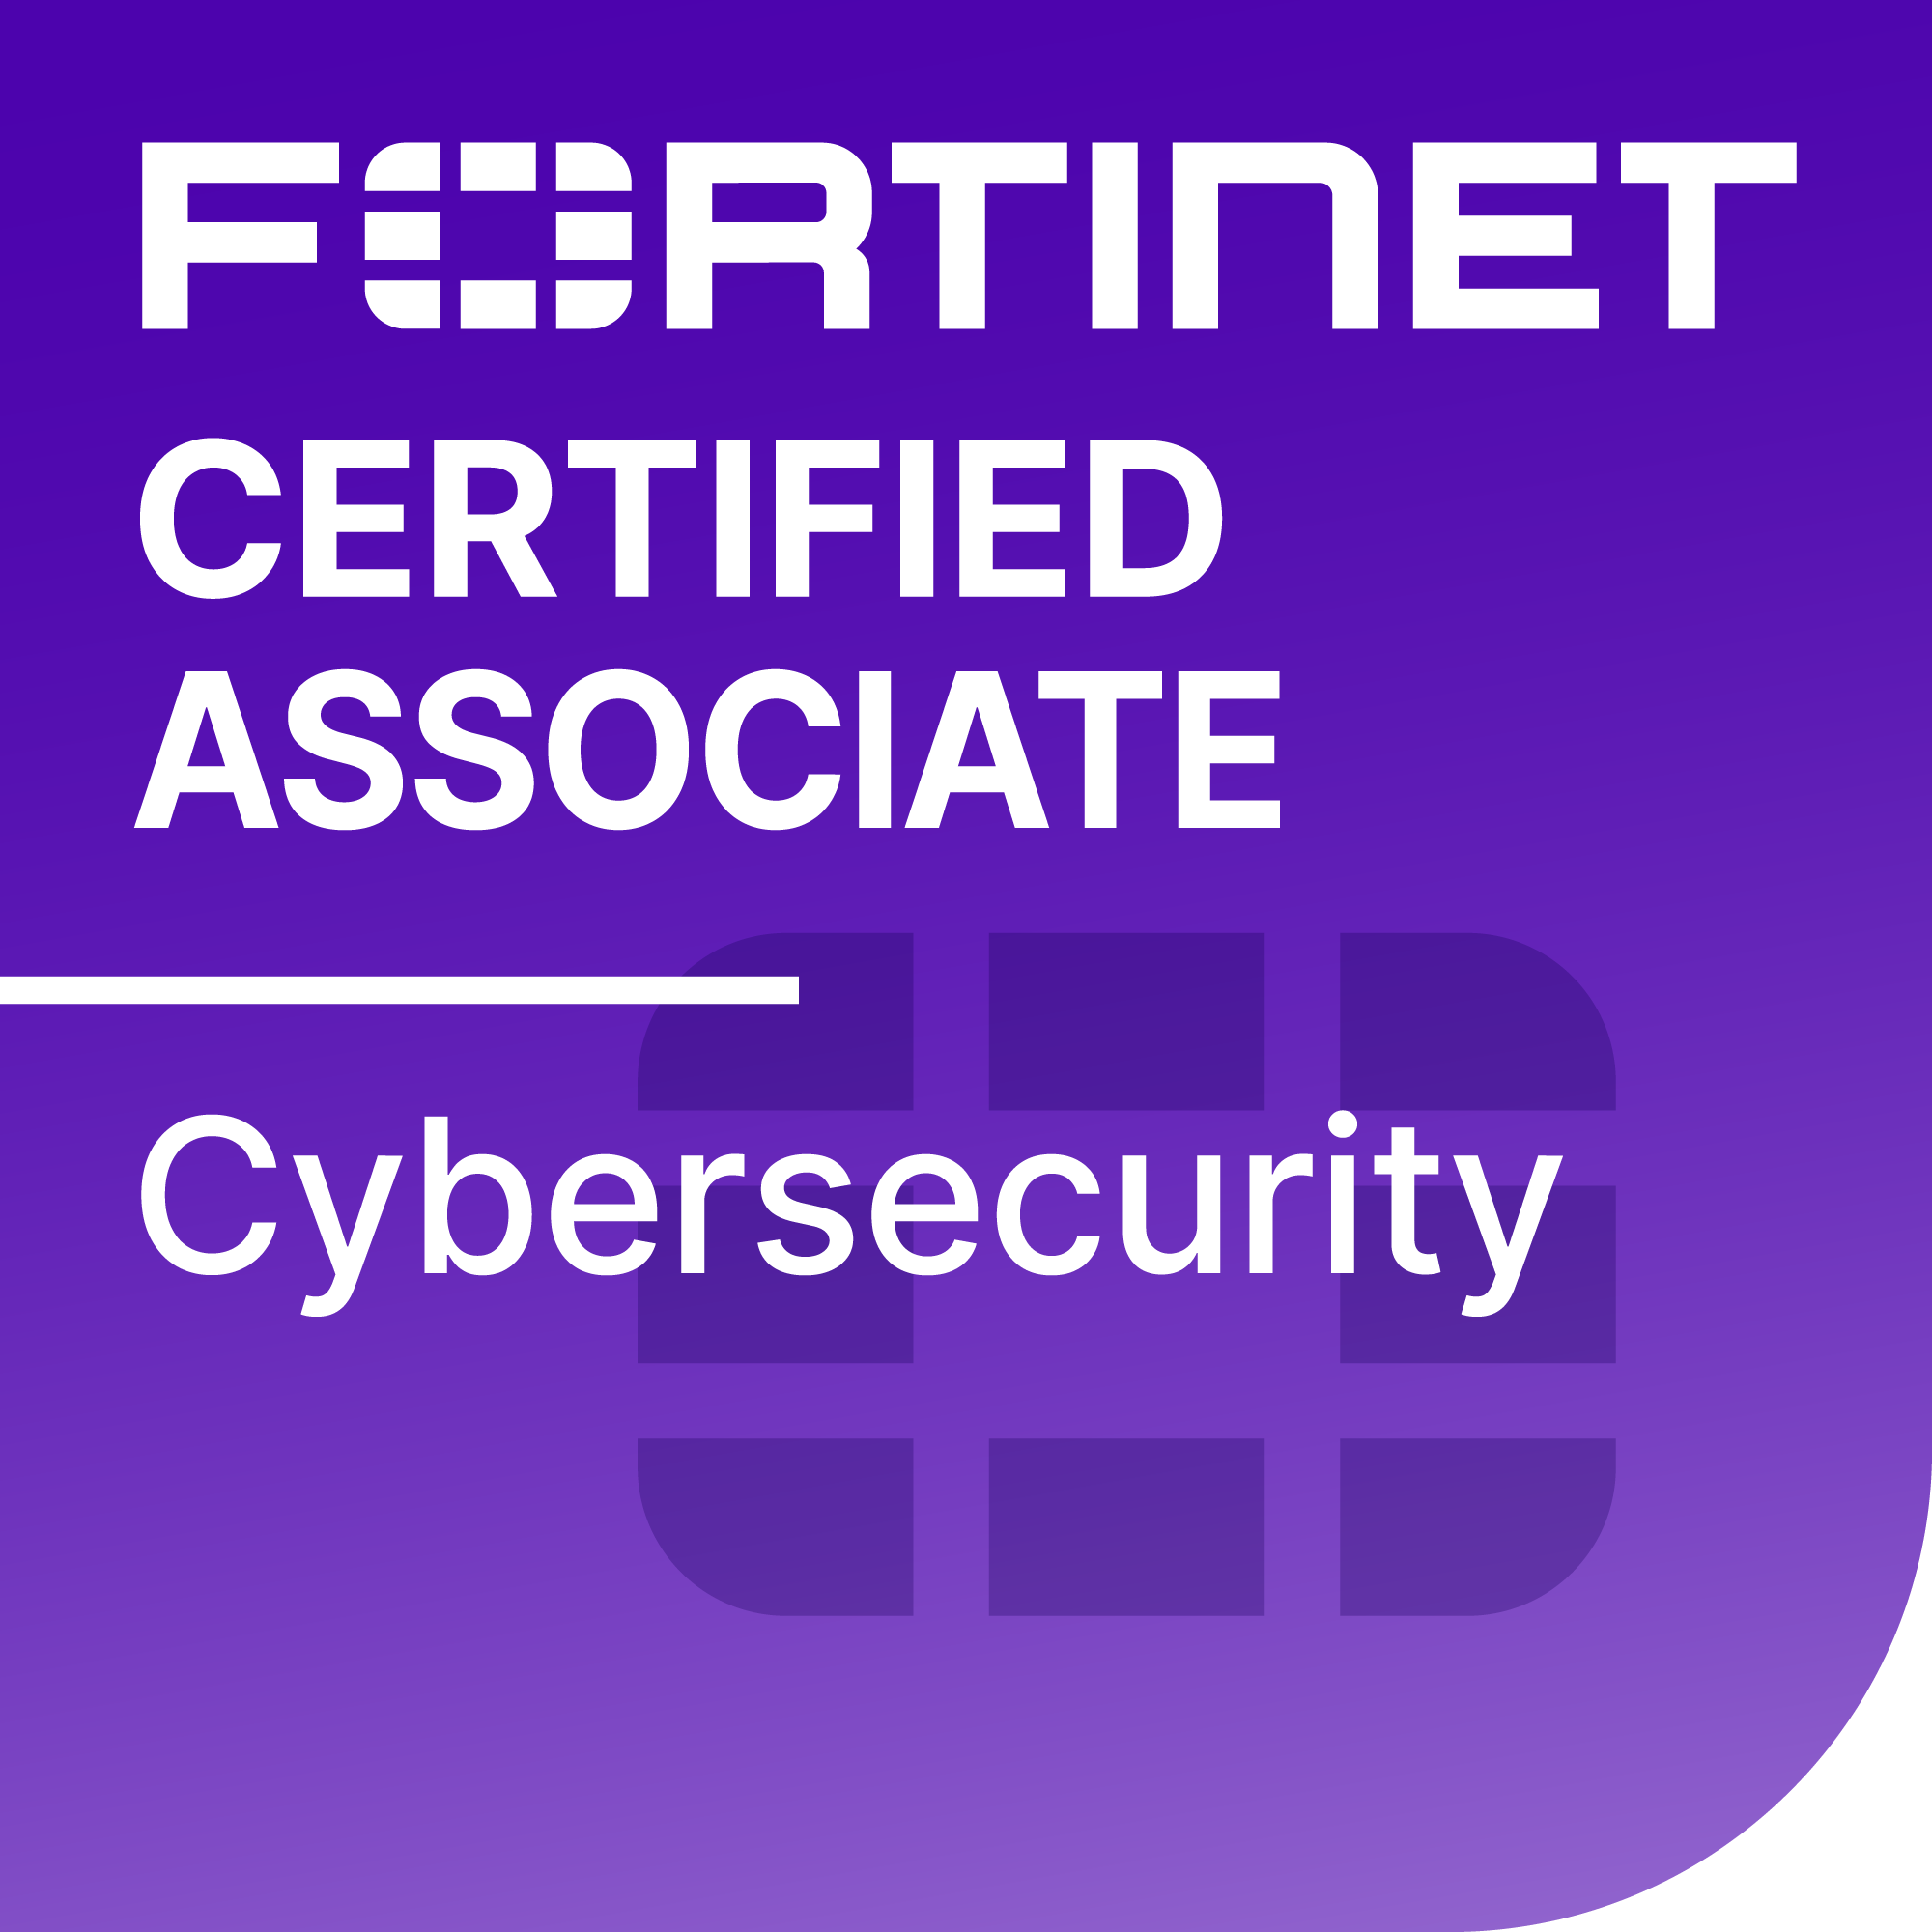 Fortinet Certified Associate badge